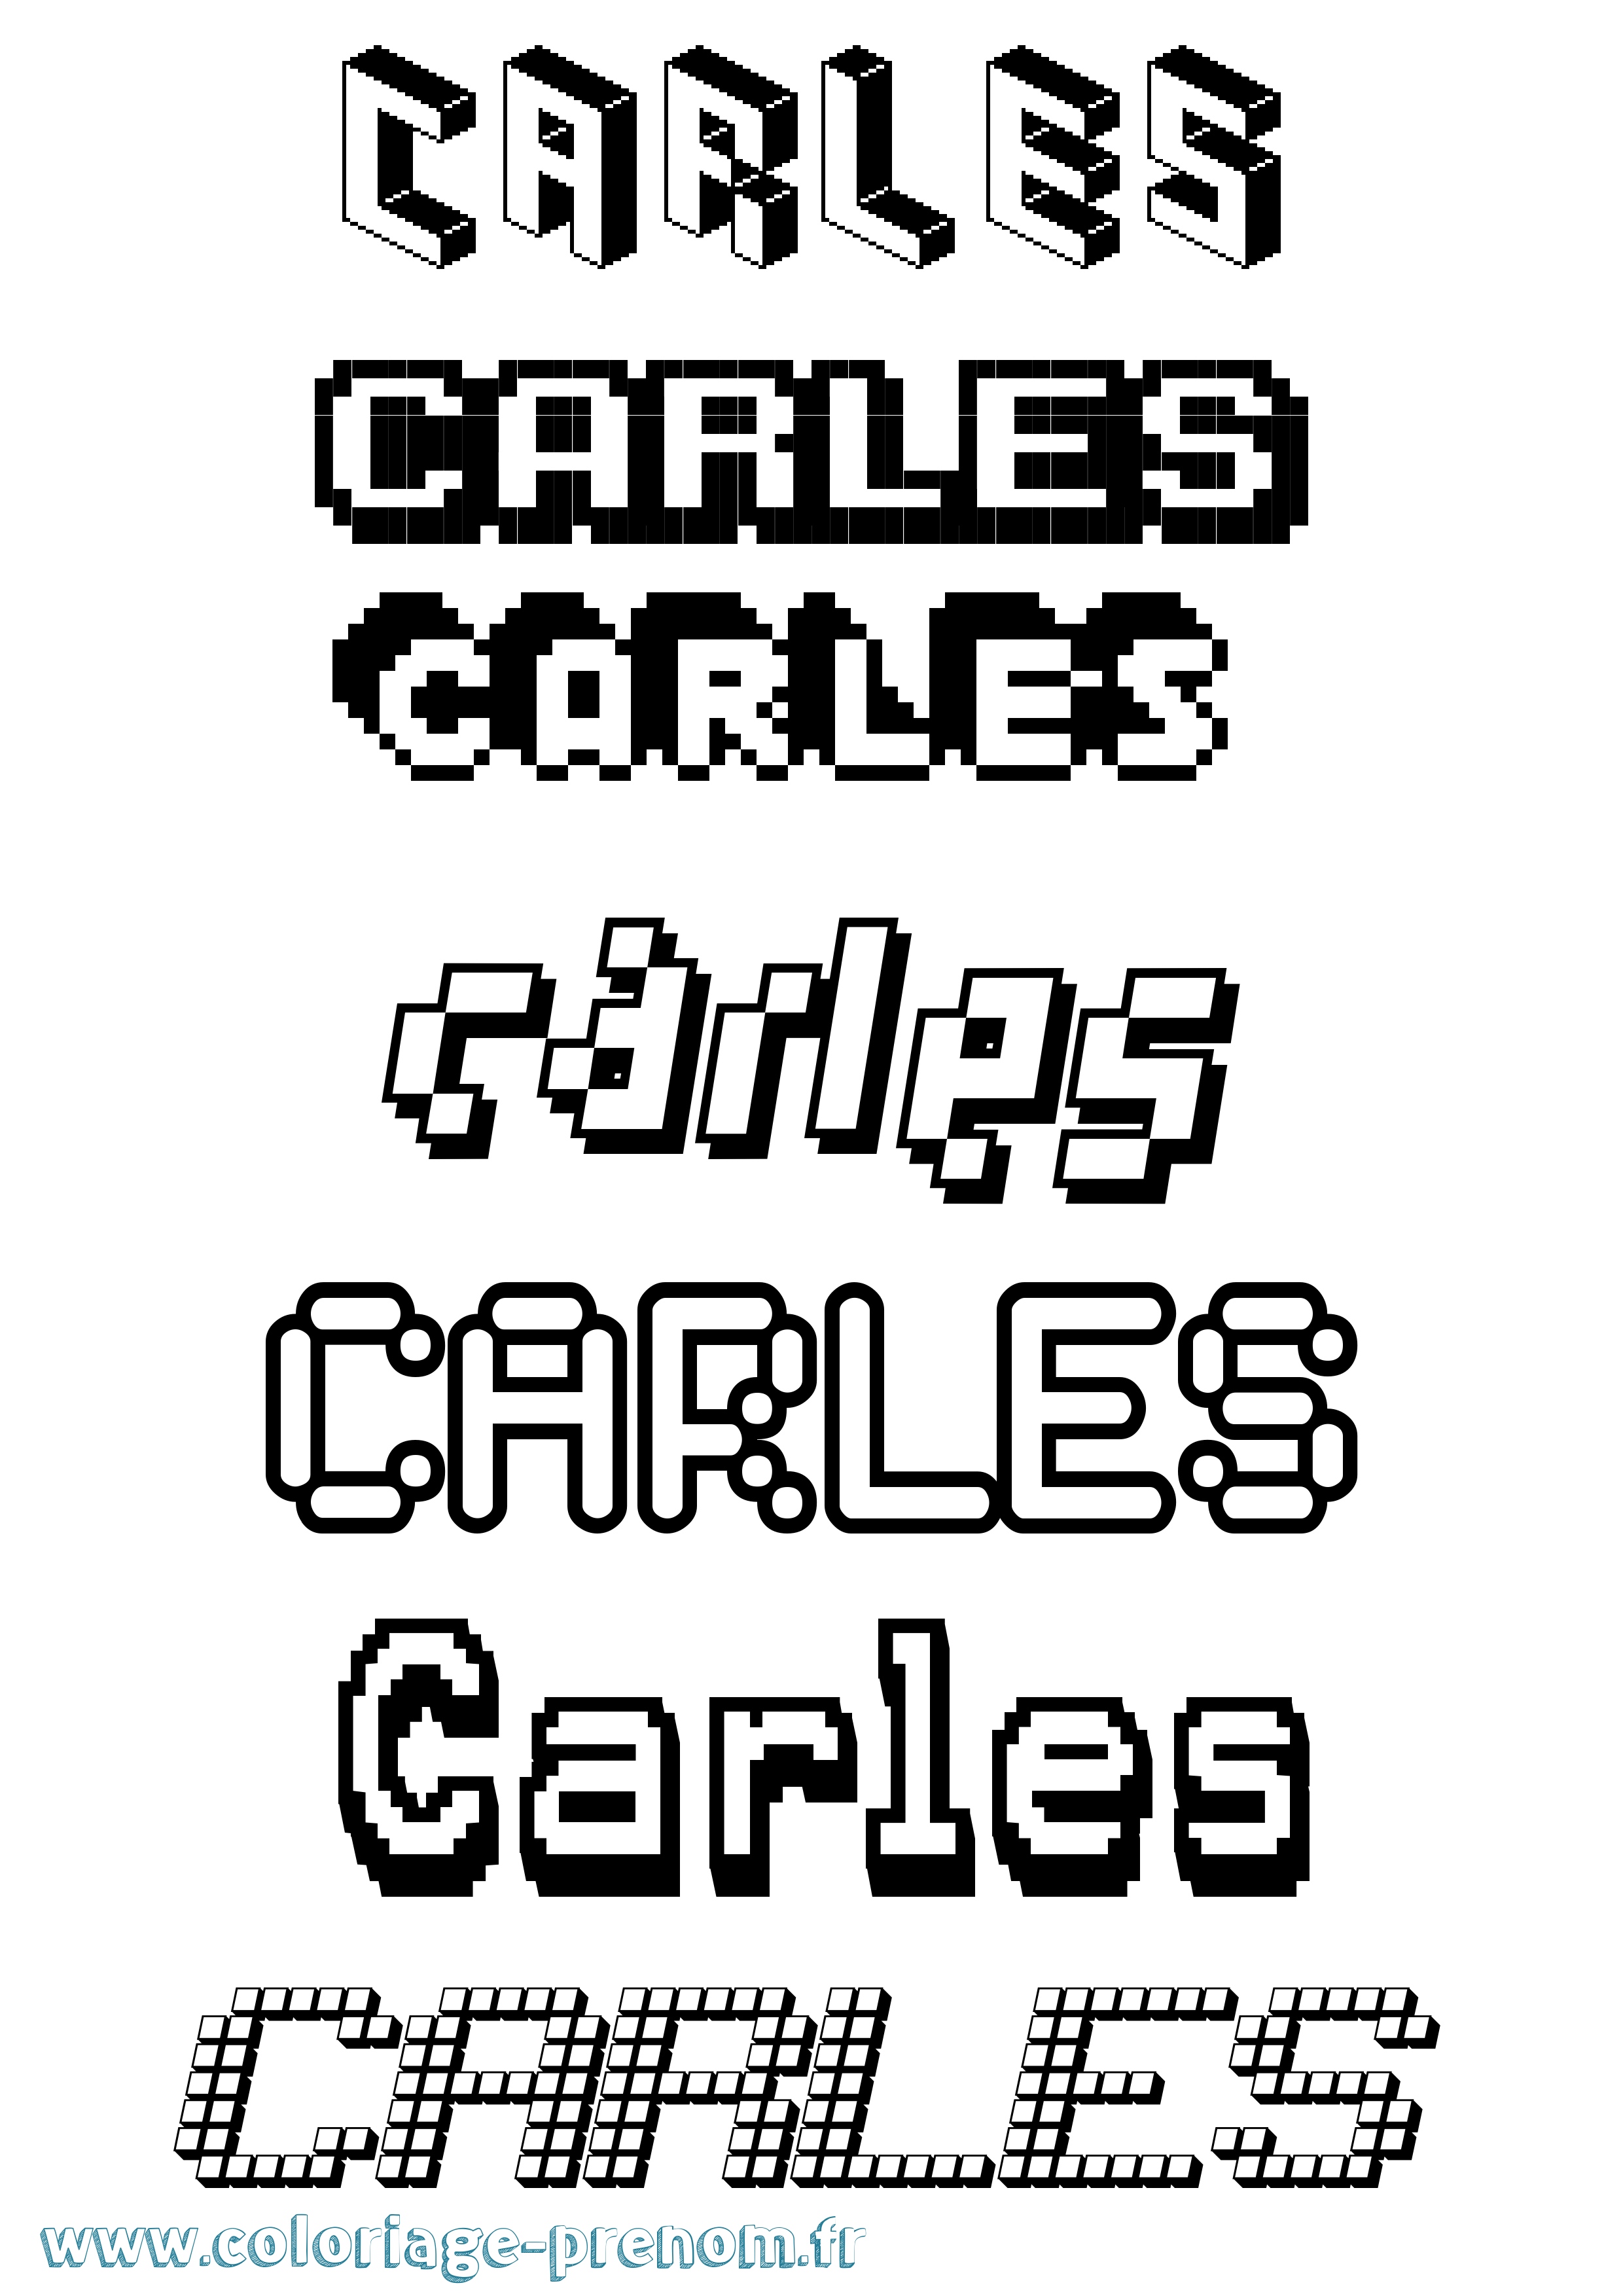 Coloriage prénom Carles Pixel